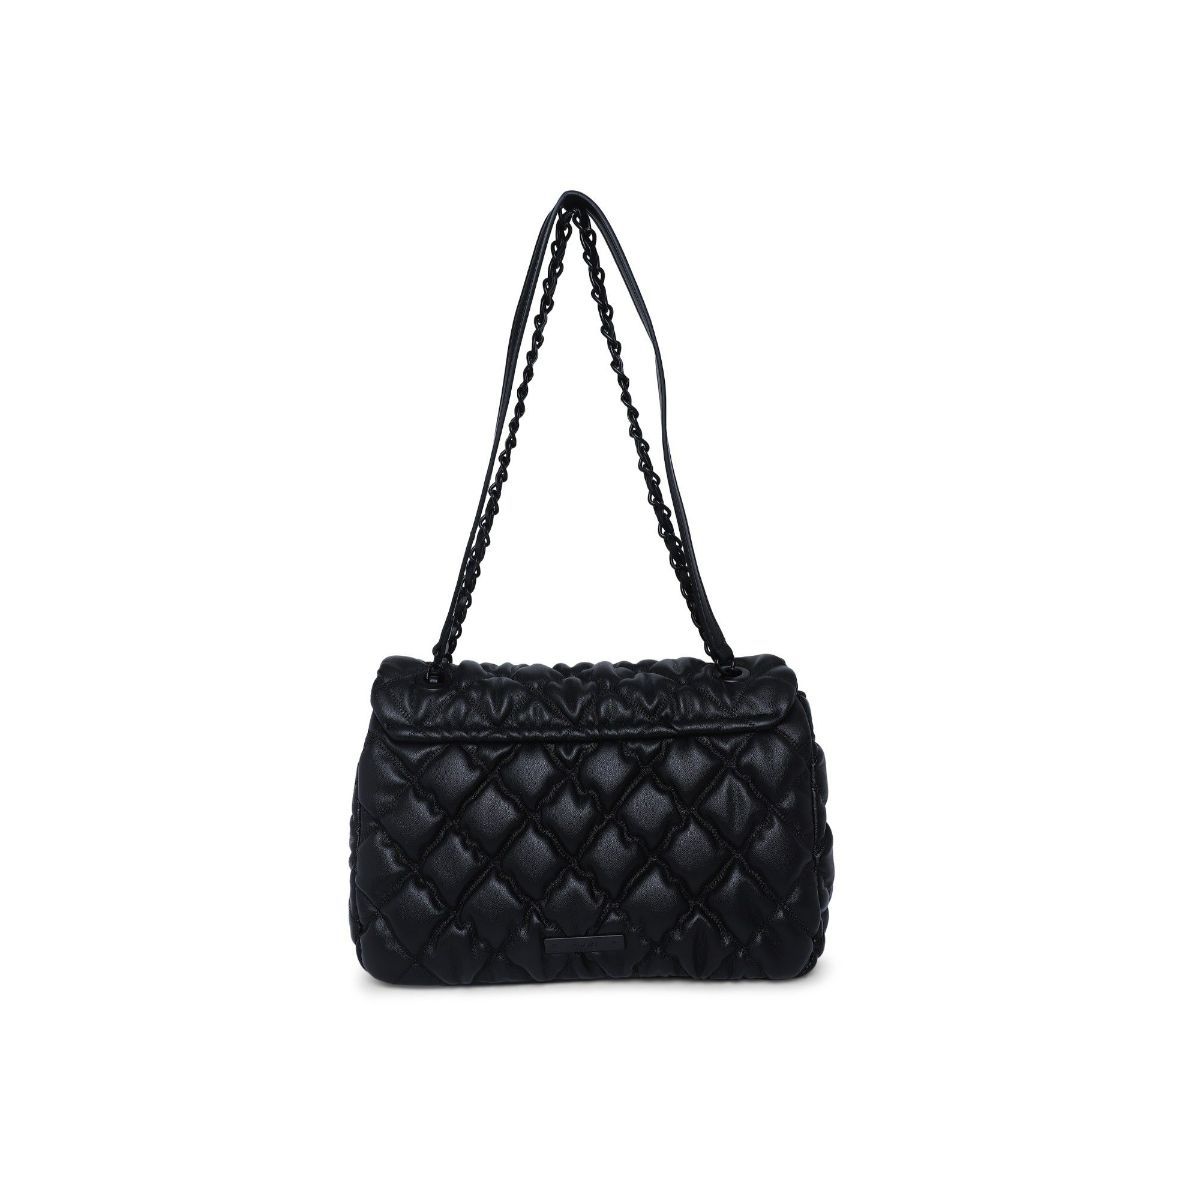 ALDO Bressanvido crossbody with chain strap in black | ASOS | Black handbag  small, Shoulder bag, Chain strap